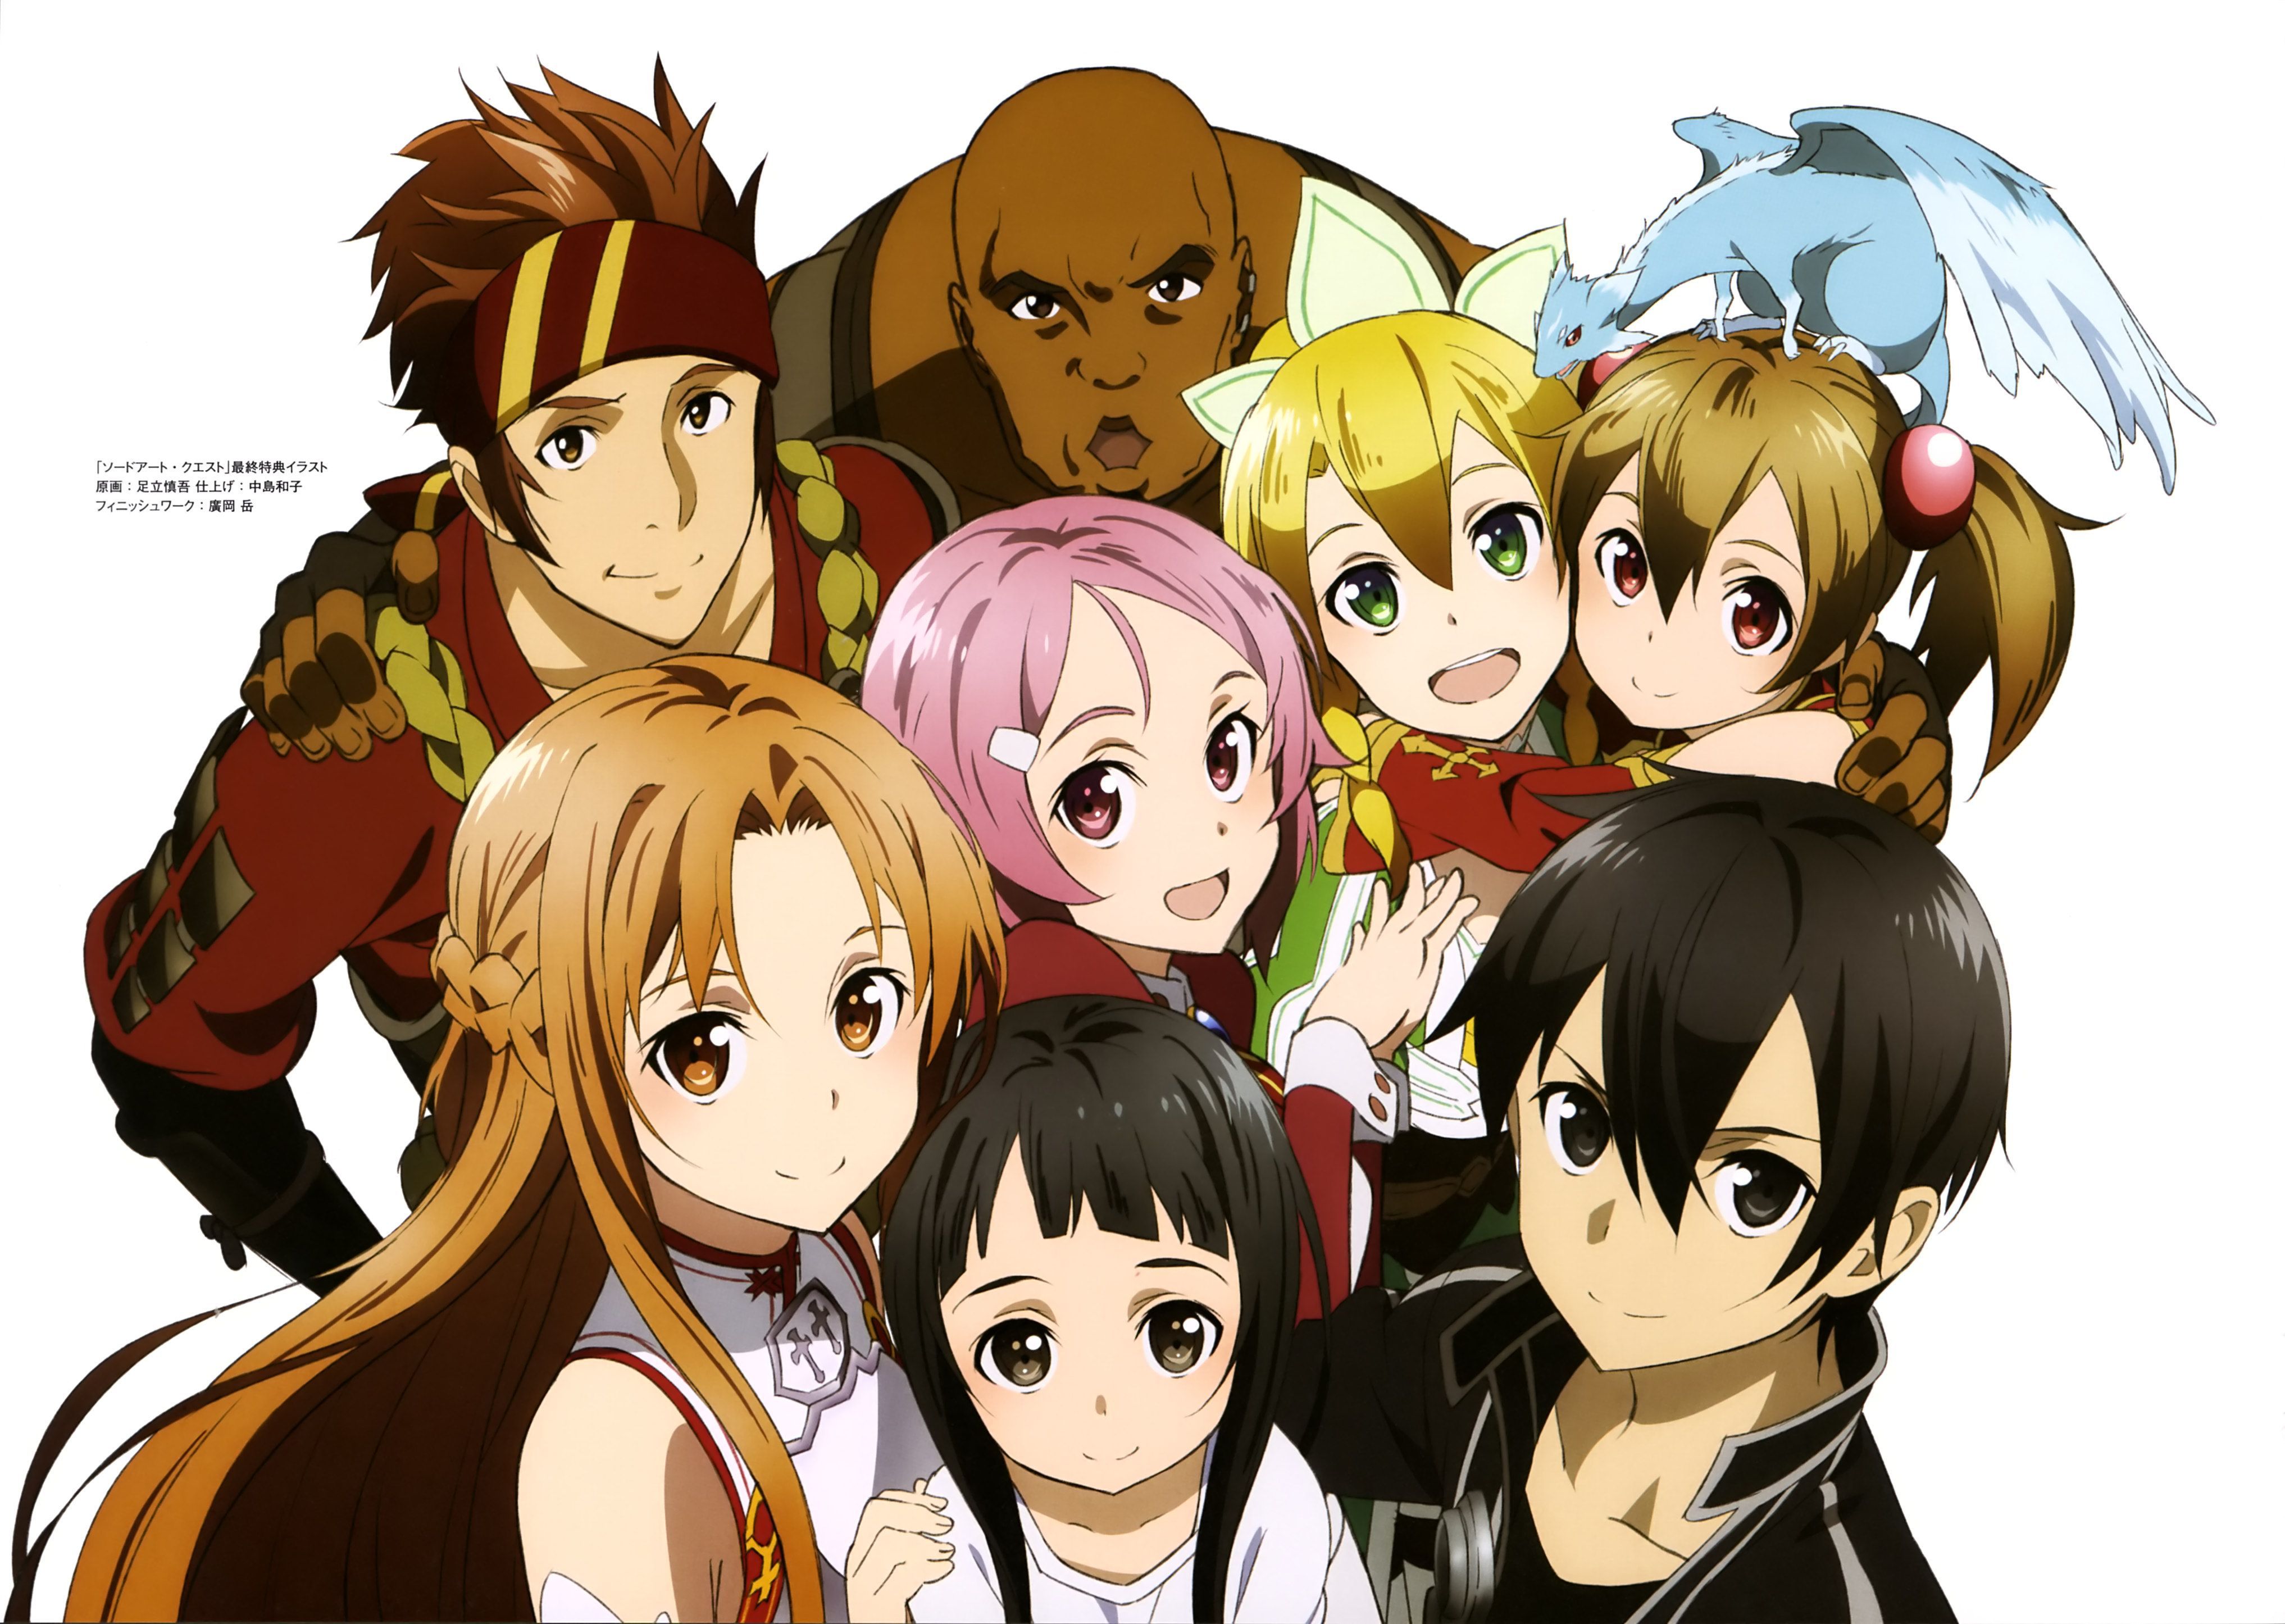 Asuna, Kirito, Yui, Silica with Pina, Lisbeth, Klein, Argil